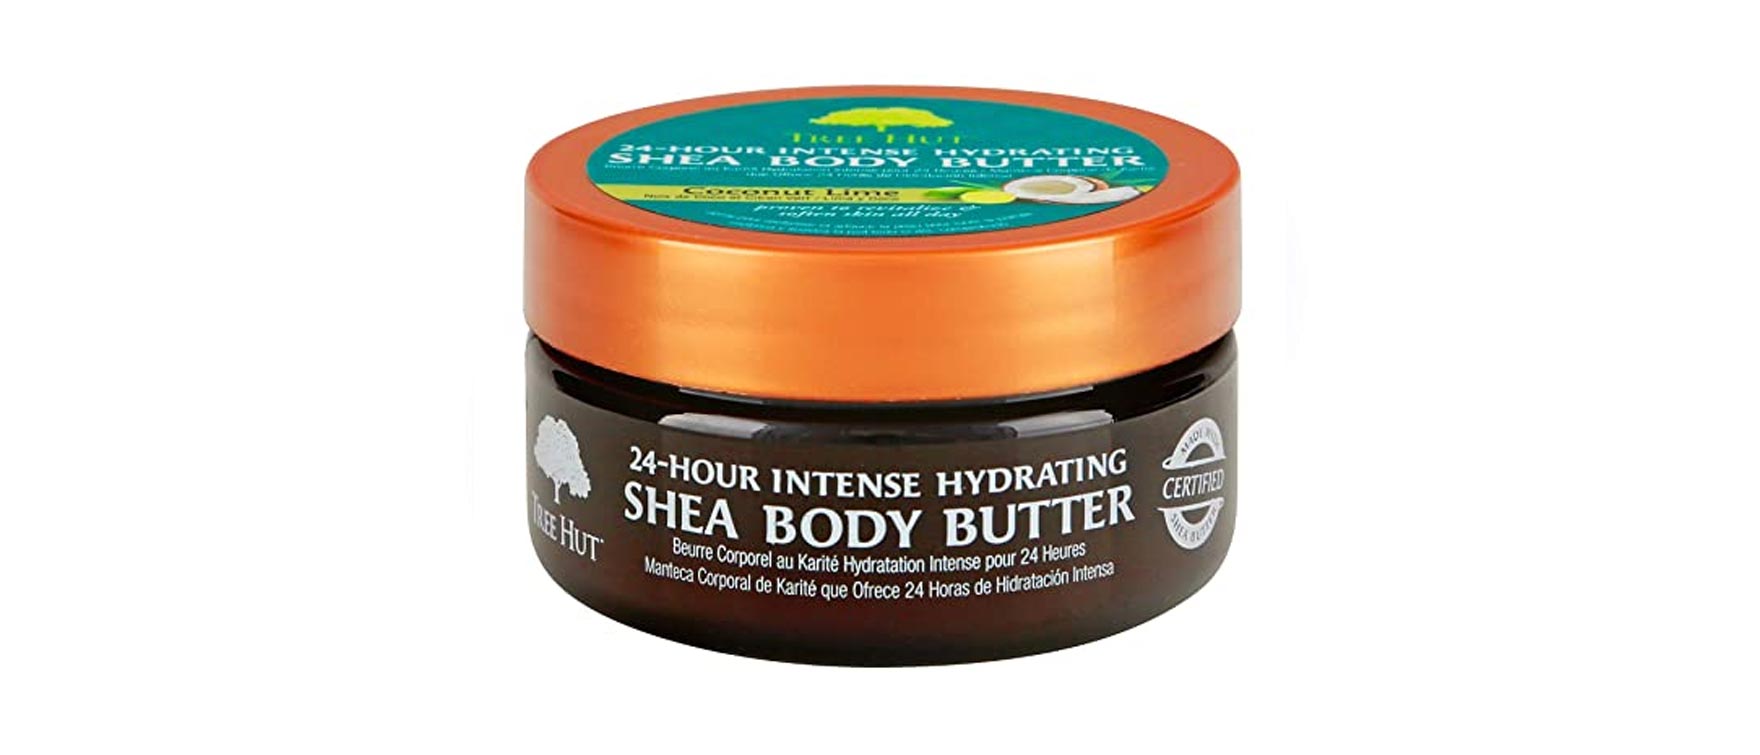 3. Long-Lasting: Tree Hut 24-Hour Intense Hydrating Shea Body Butter